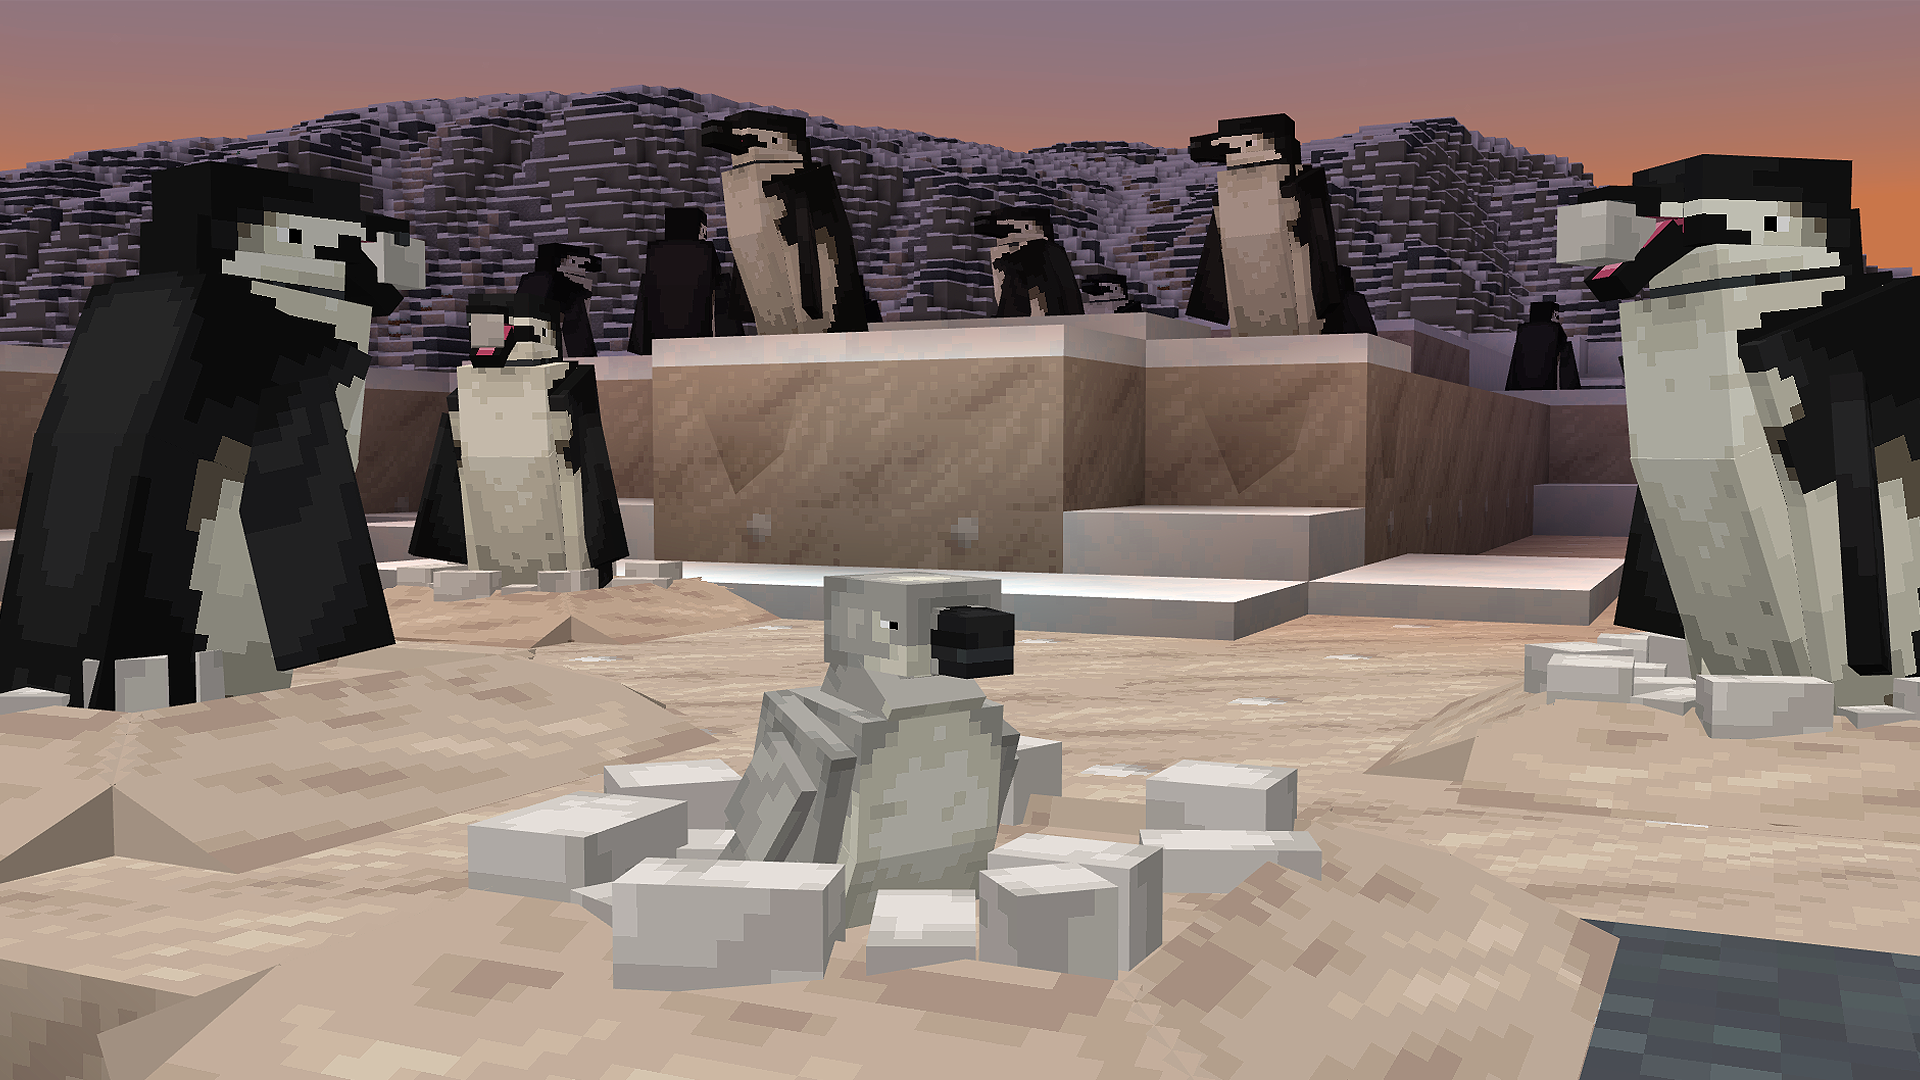 Penguins in Minecraft Frozen Planet